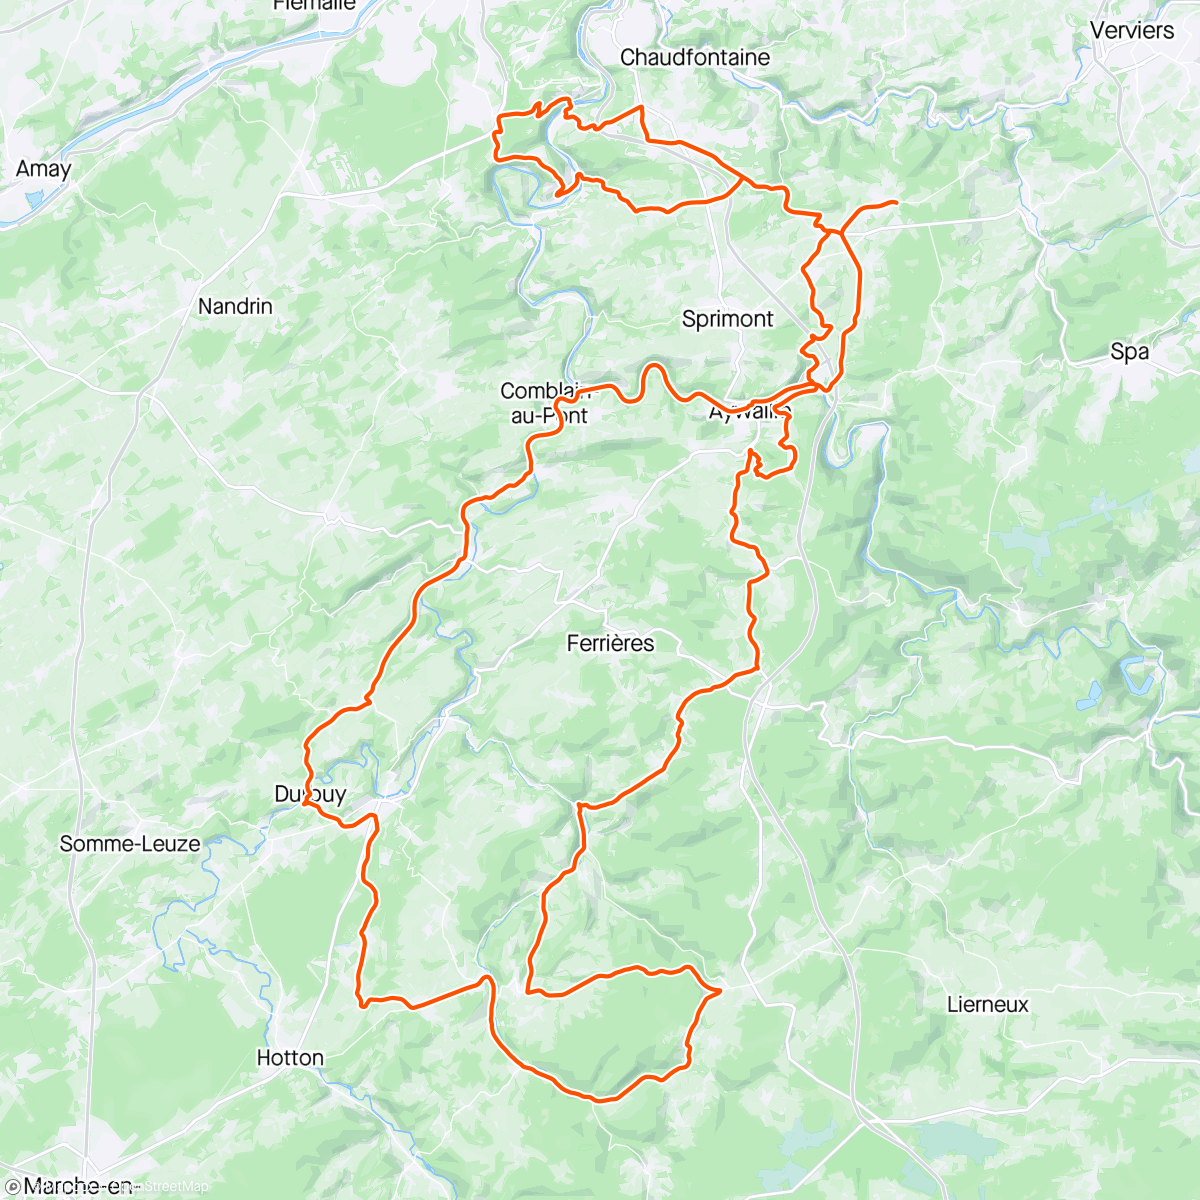 Mapa da atividade, Liege Bastogne Liege ride.
Heroic ride. Pluie grêle vent froid 👍👍😎